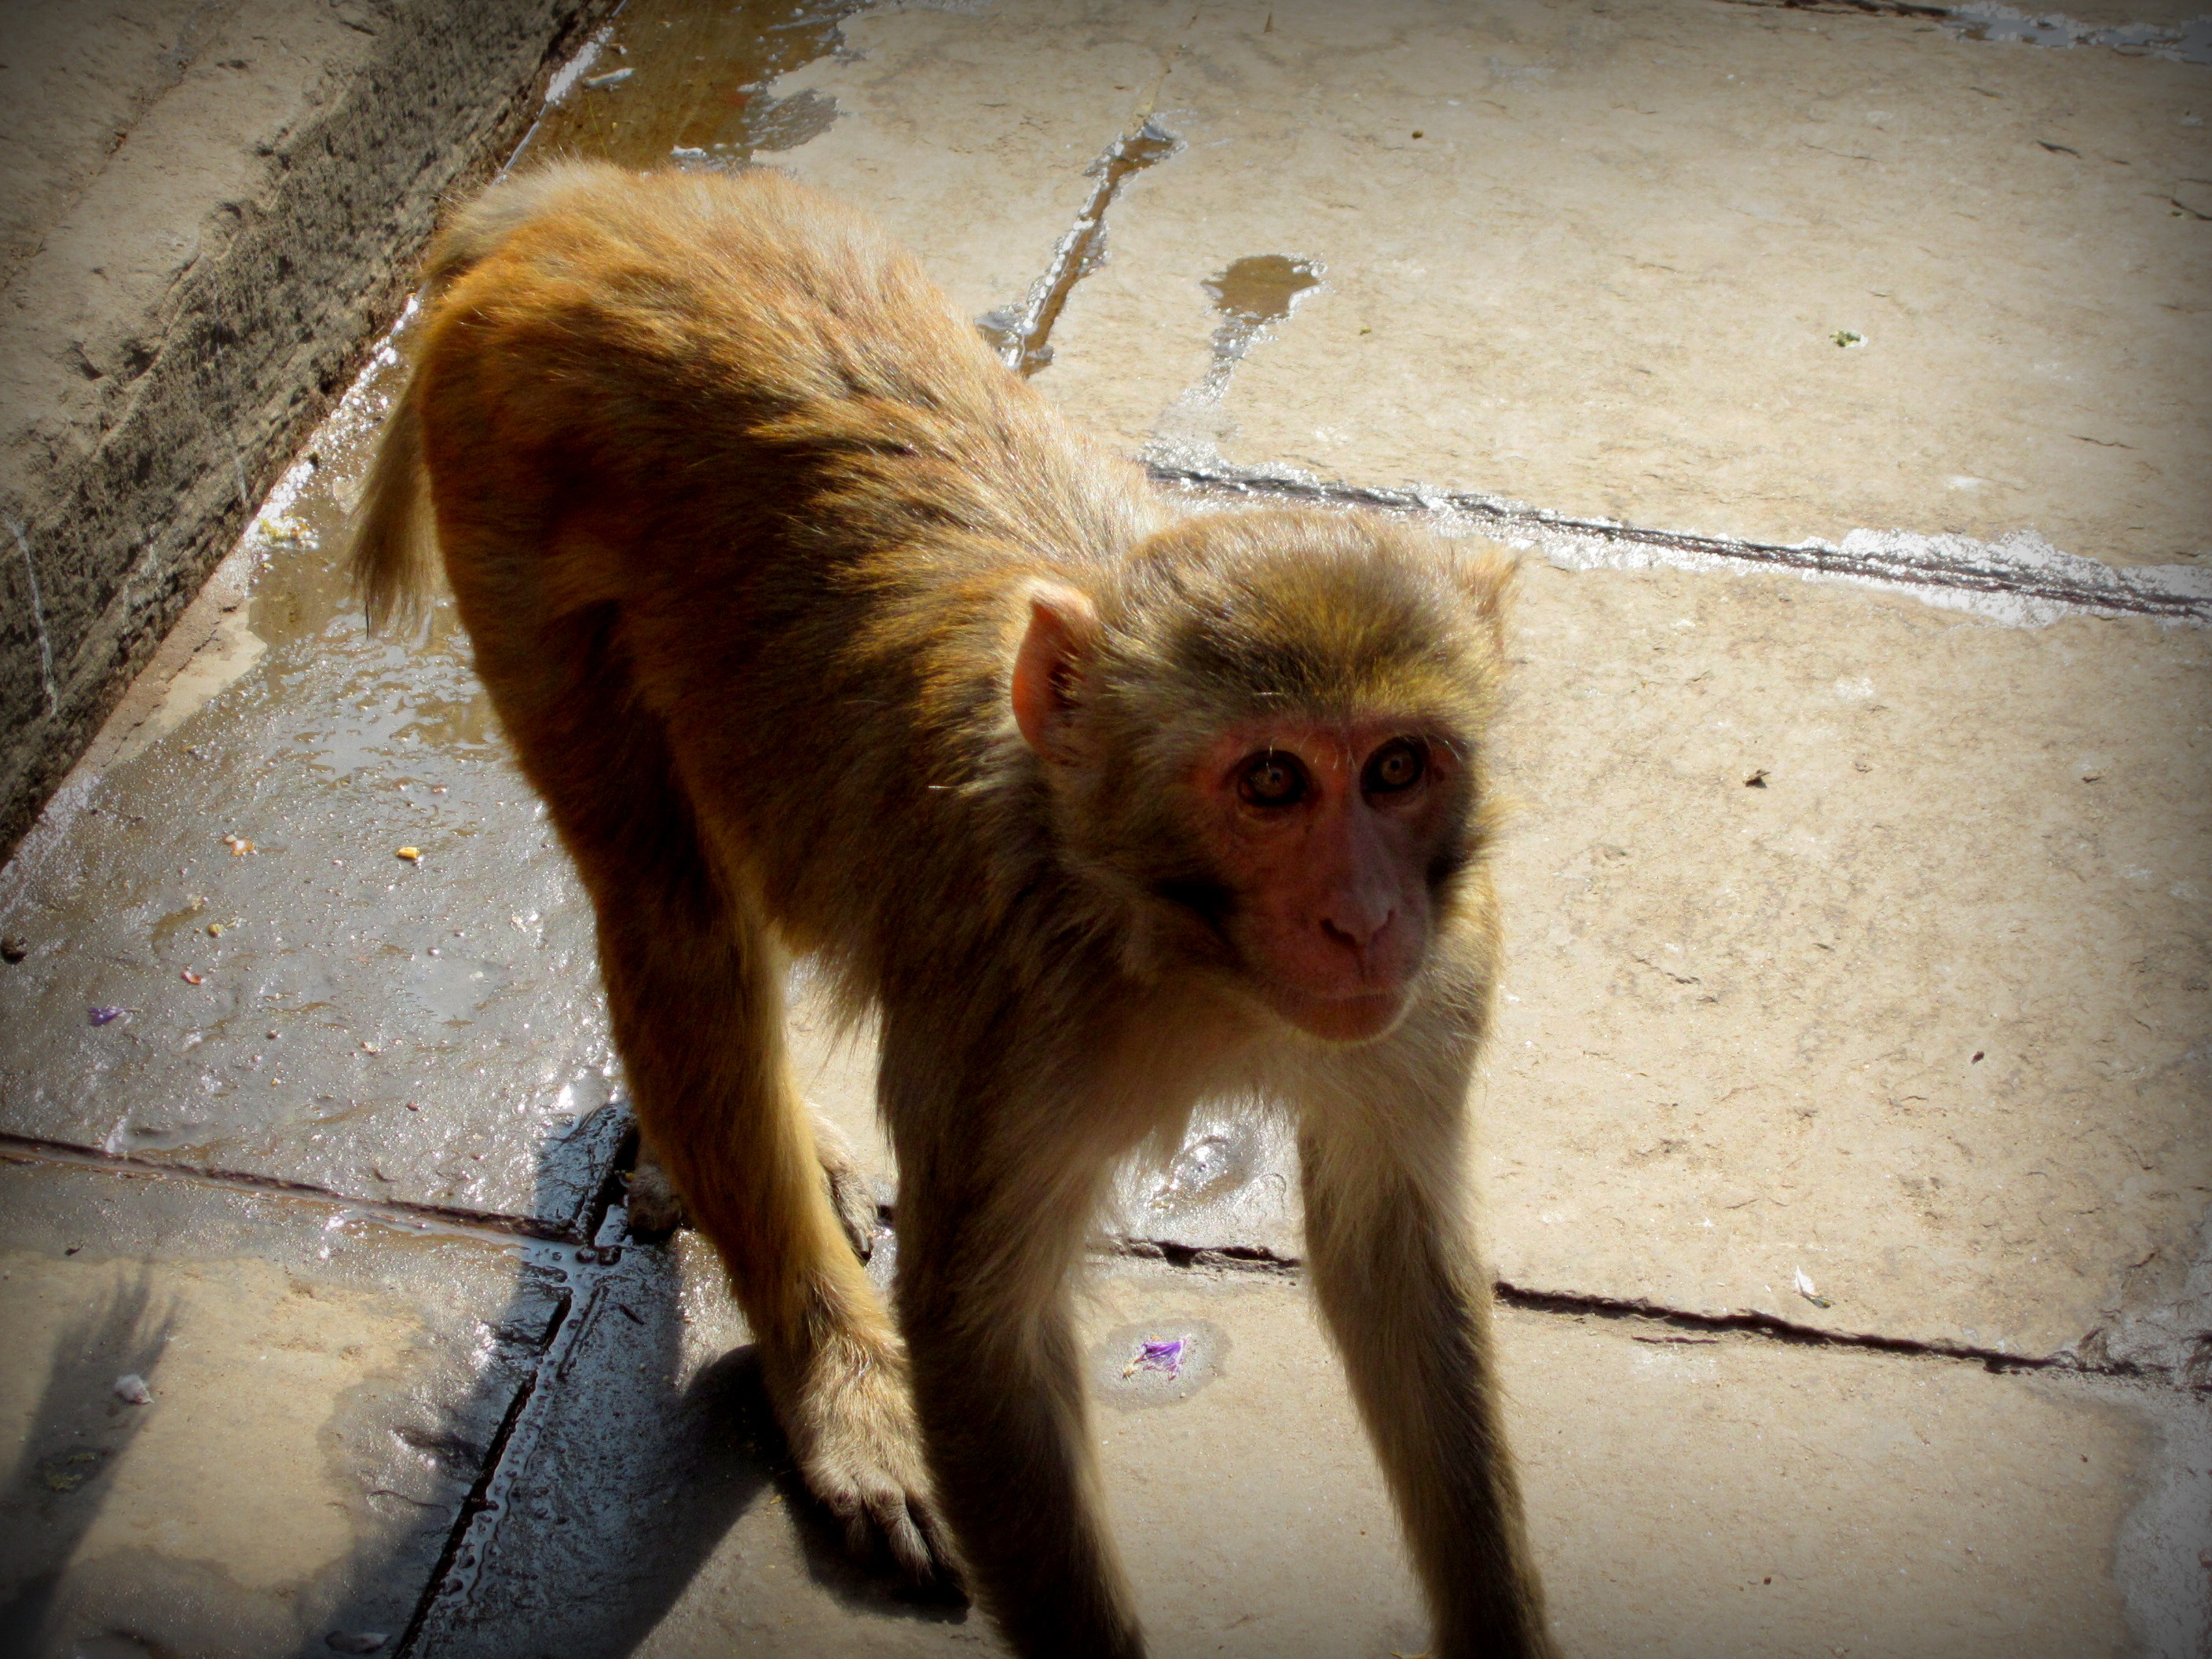 Monkeys live inside the city of Kathmandu, Nepal